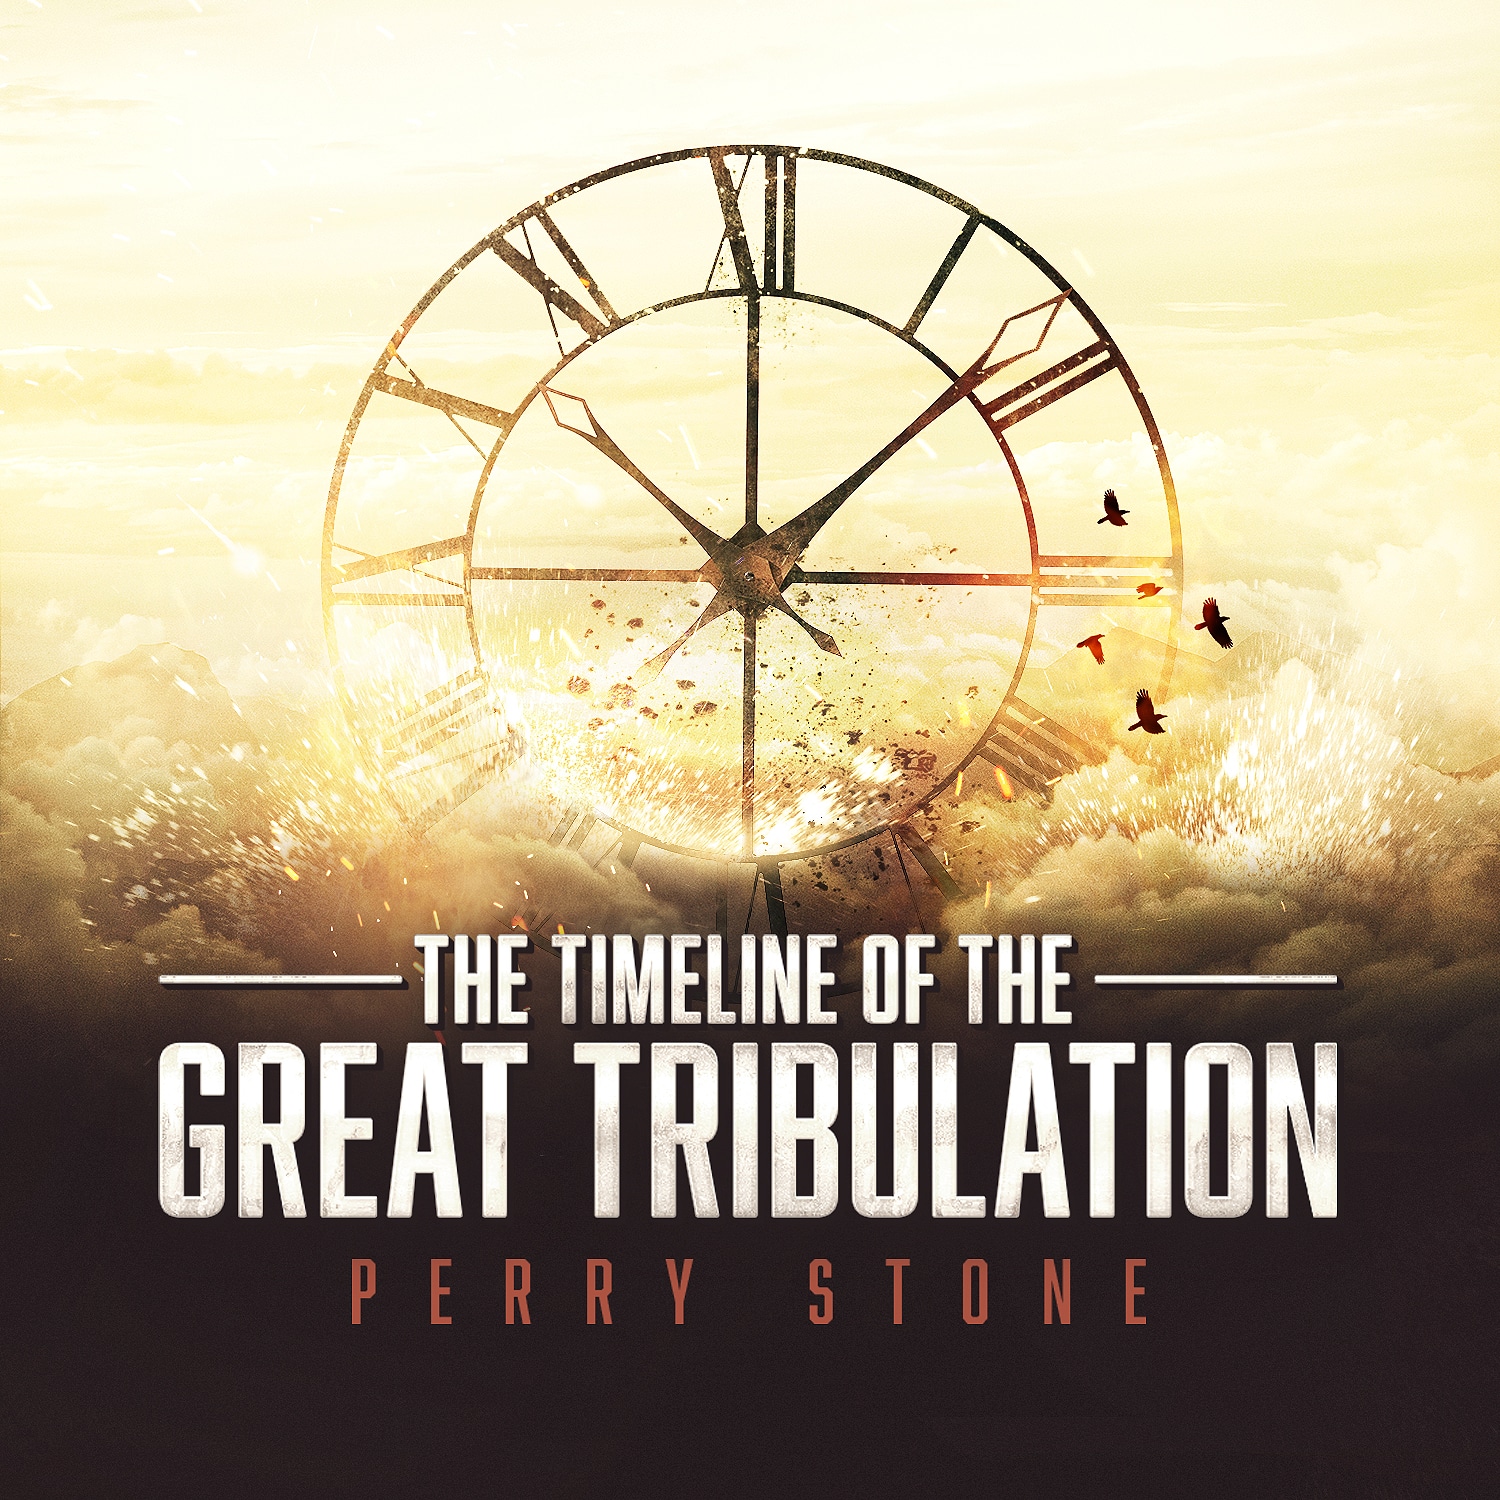 the tribulation timeline